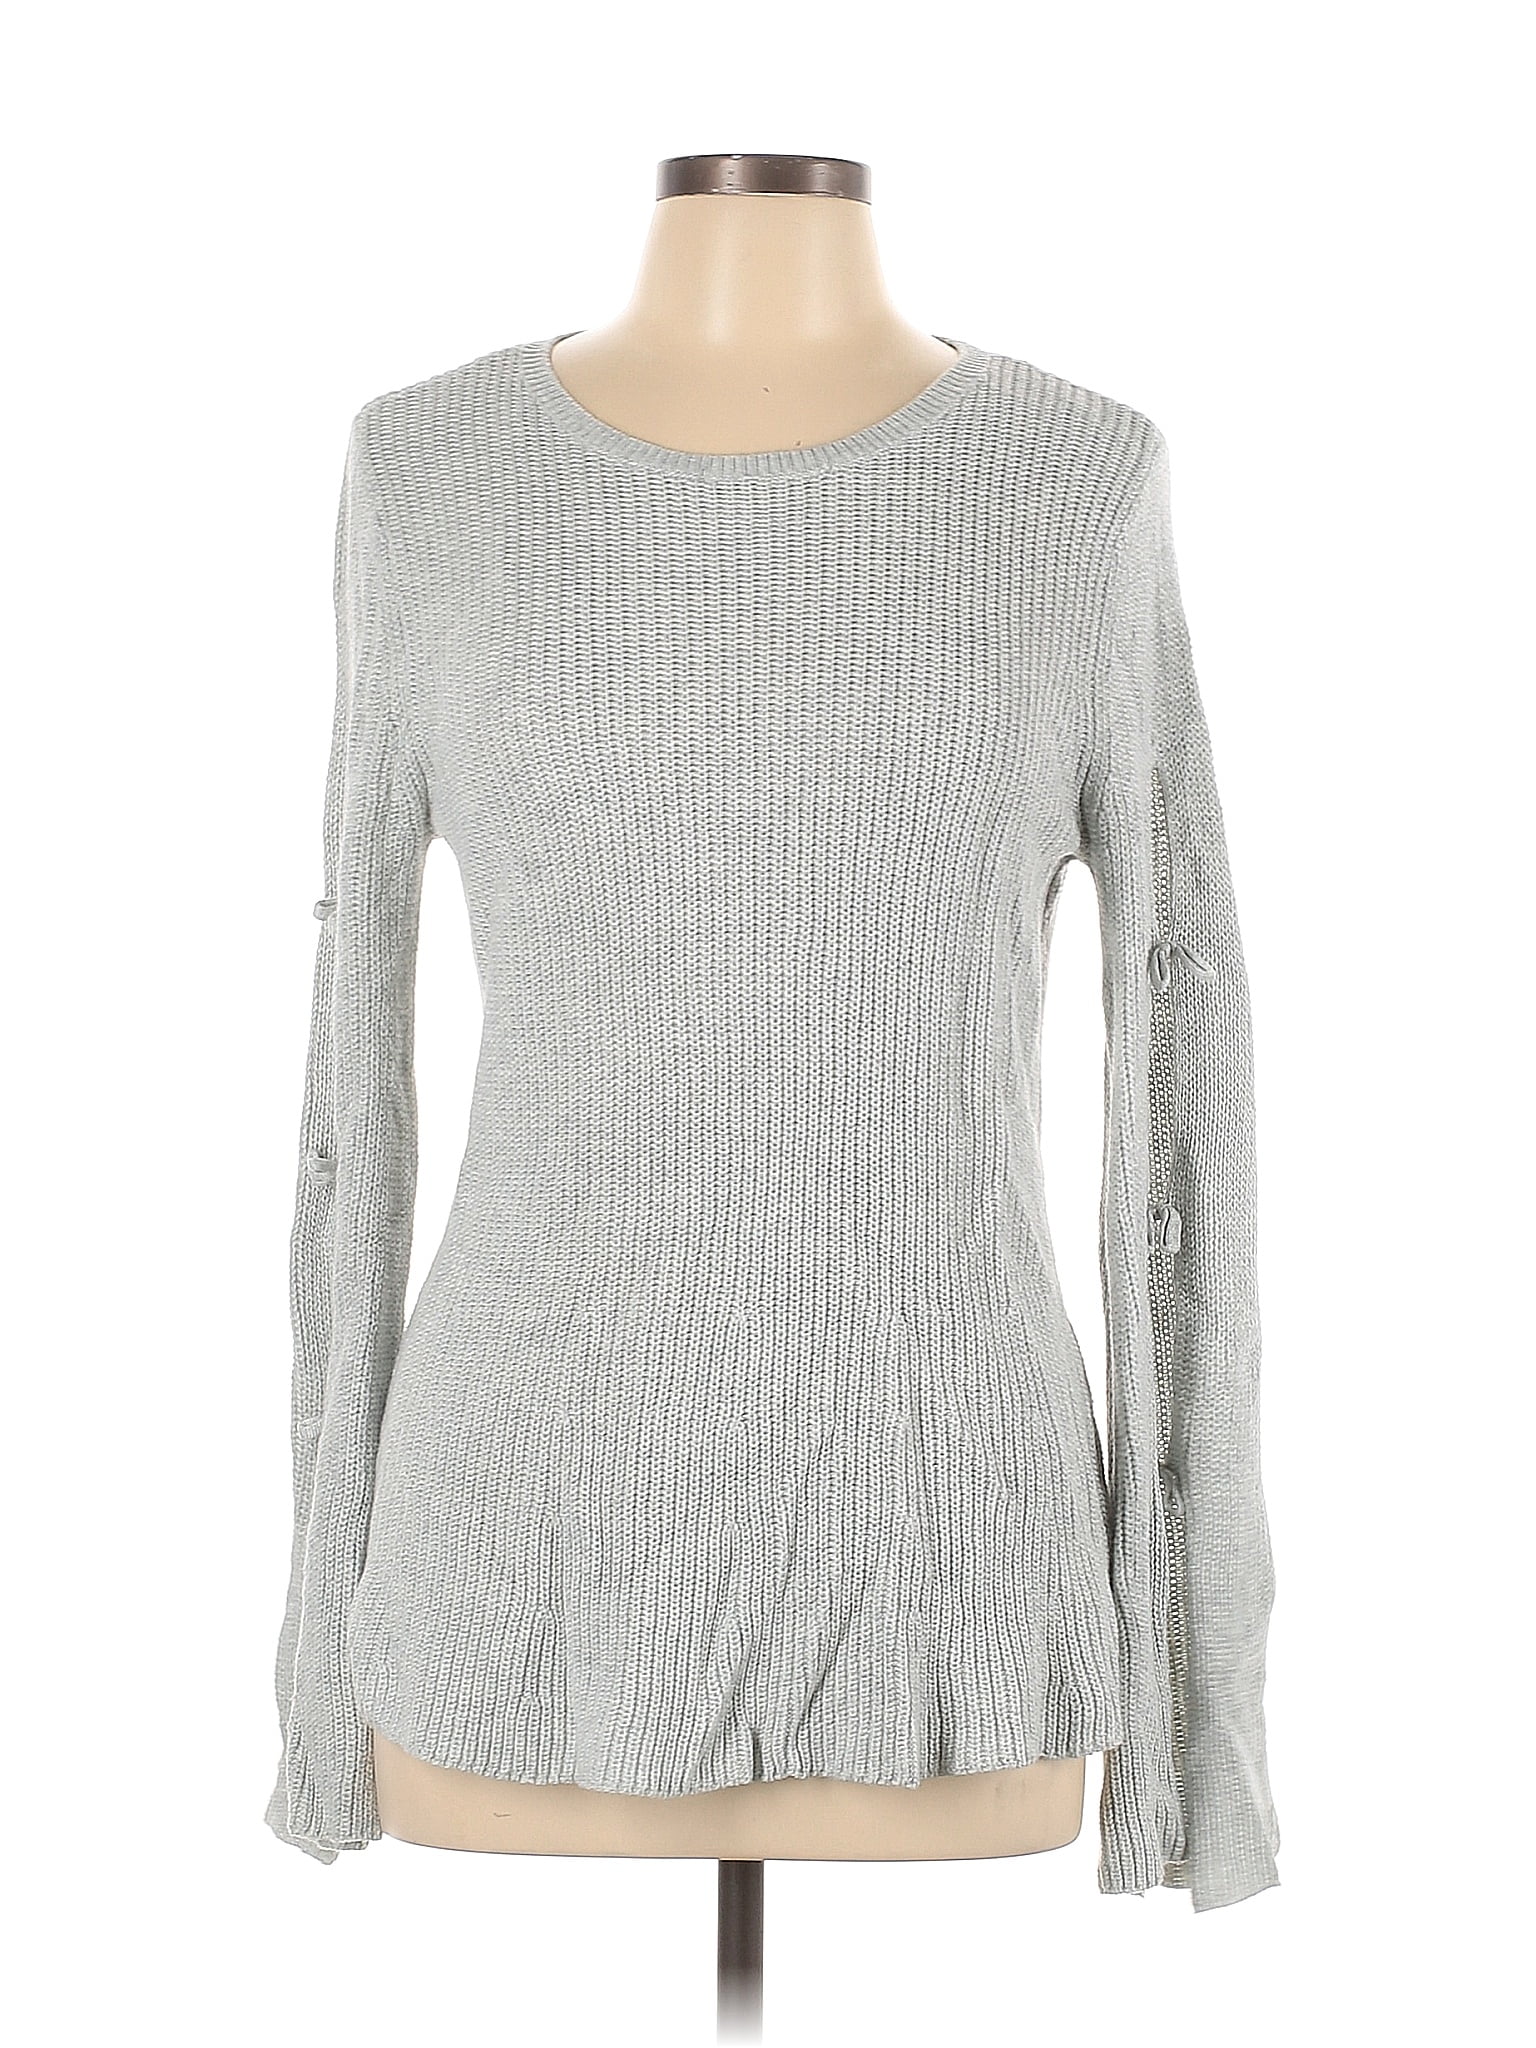 LC Lauren Conrad Pullover Sweater: Gray Tops - Women's Size Large, thredUP